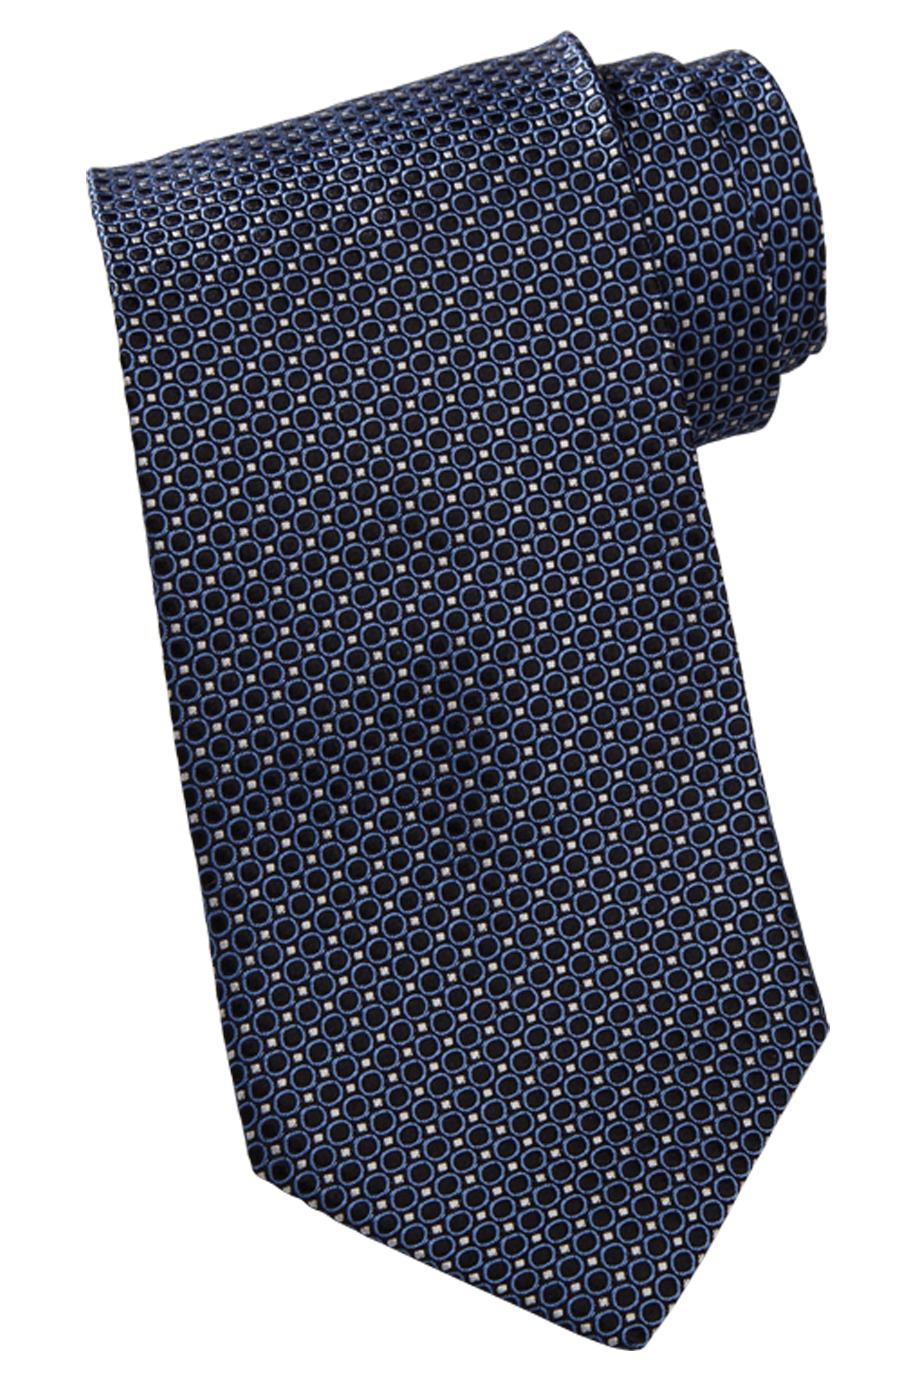 Edwards Garment CD00 - Circles And Dots Tie